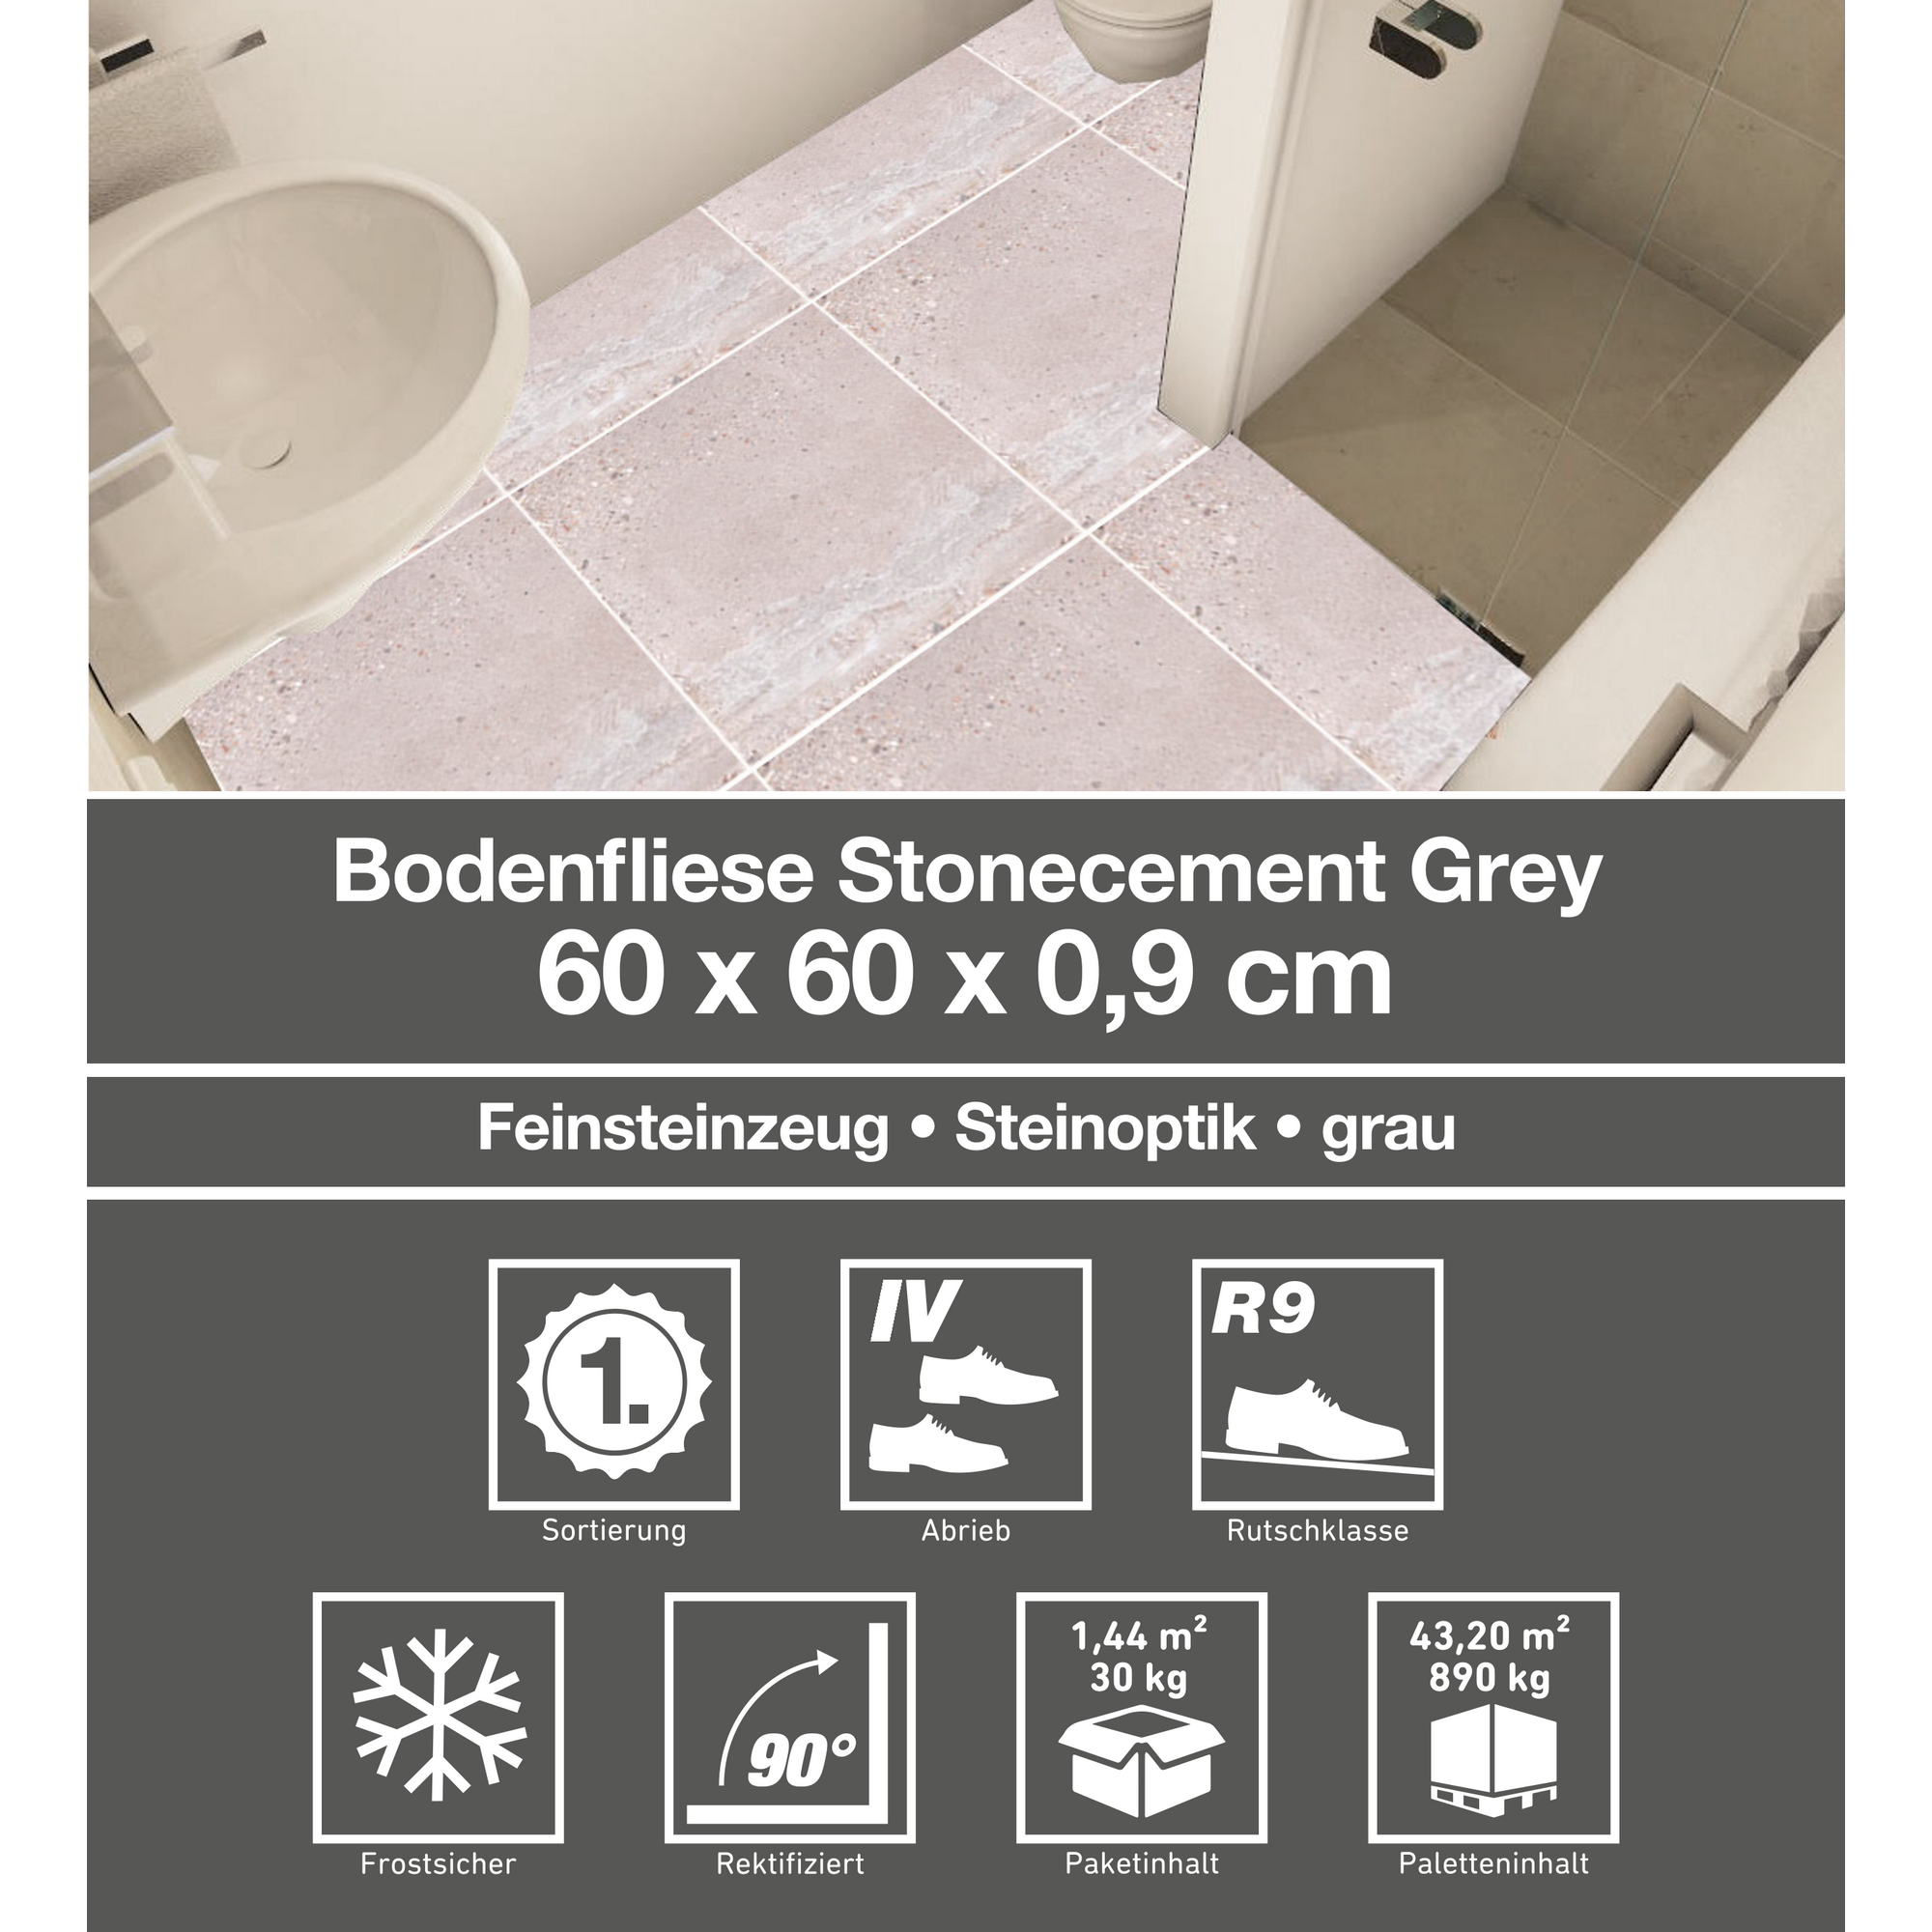 Bodenfliese 'Stonecement' Feinsteinzeug grau 60 x 60 cm + product picture